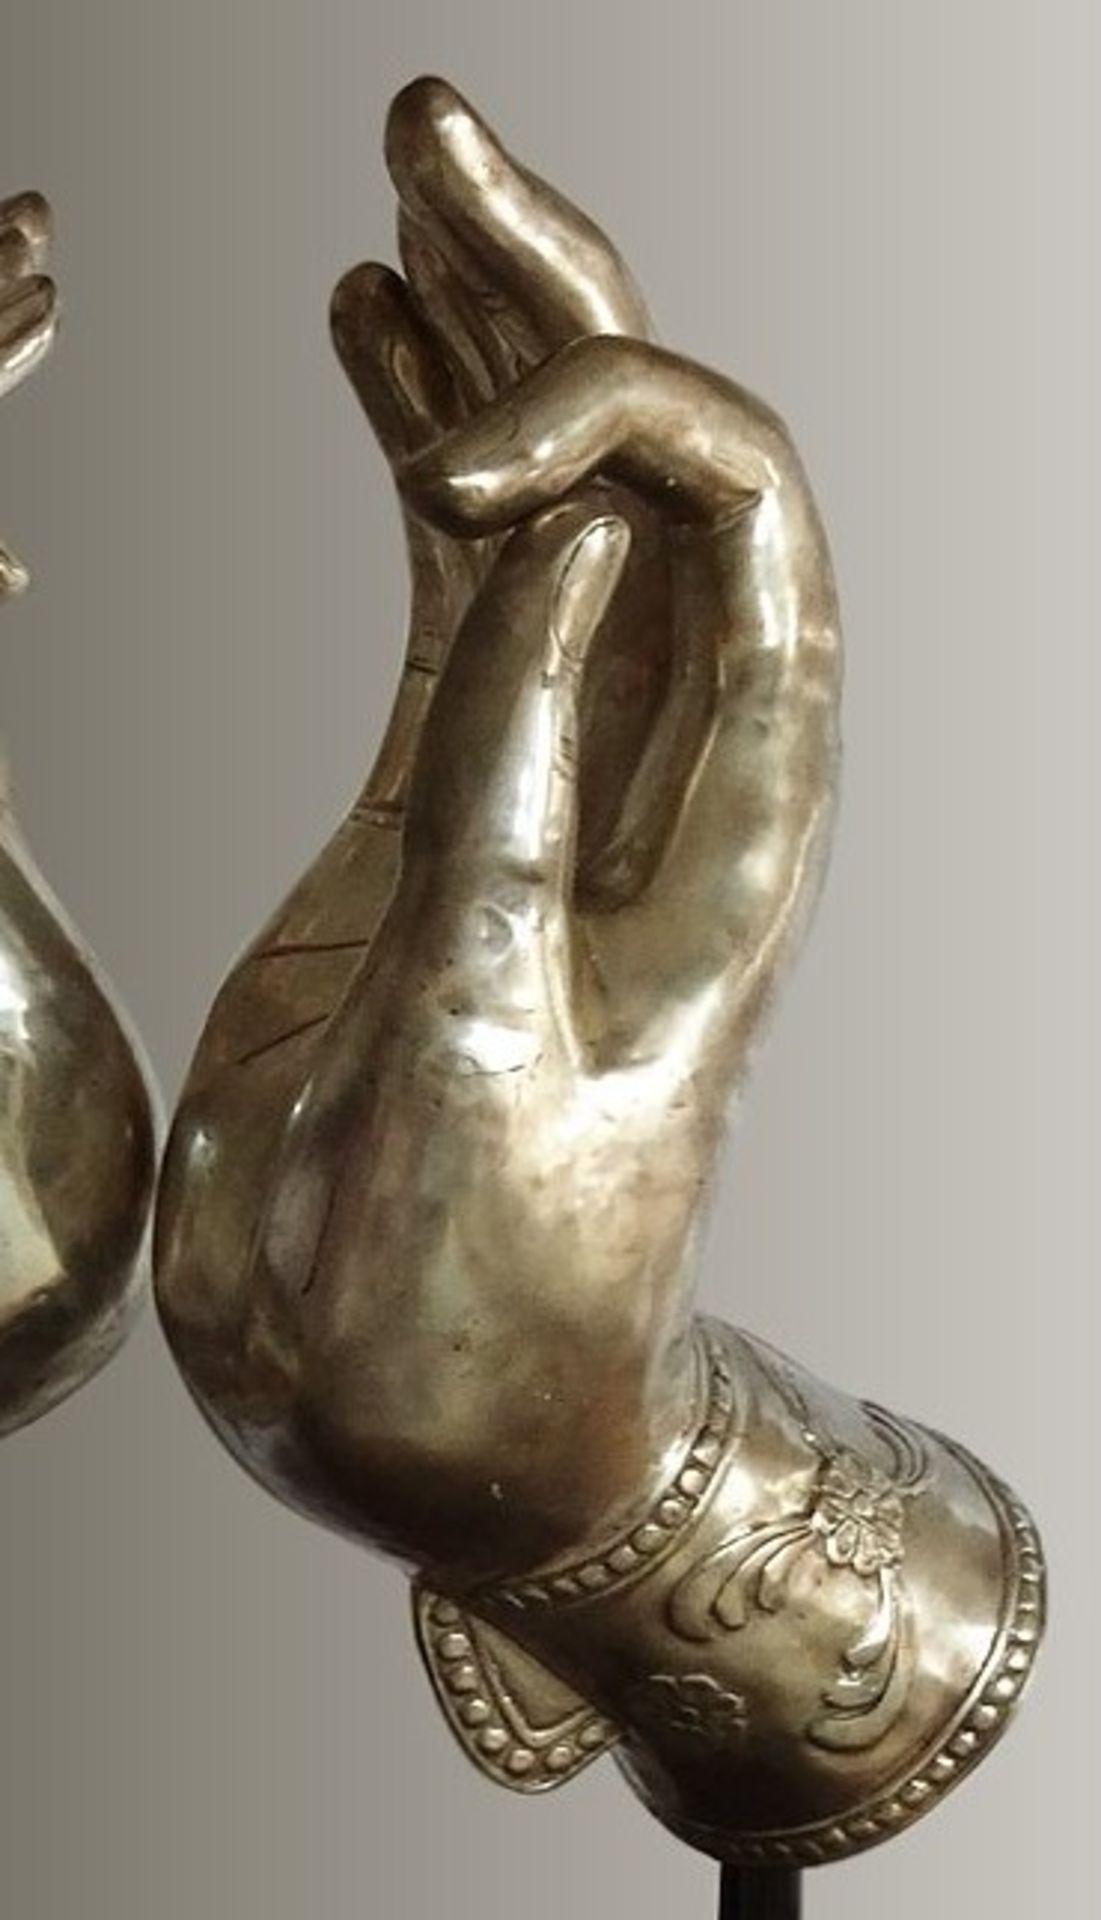 1 x Large Decorative Polished Metal Vitarka Mudra Buddha Hand - Beautifully Hand Crafted and - Image 7 of 10